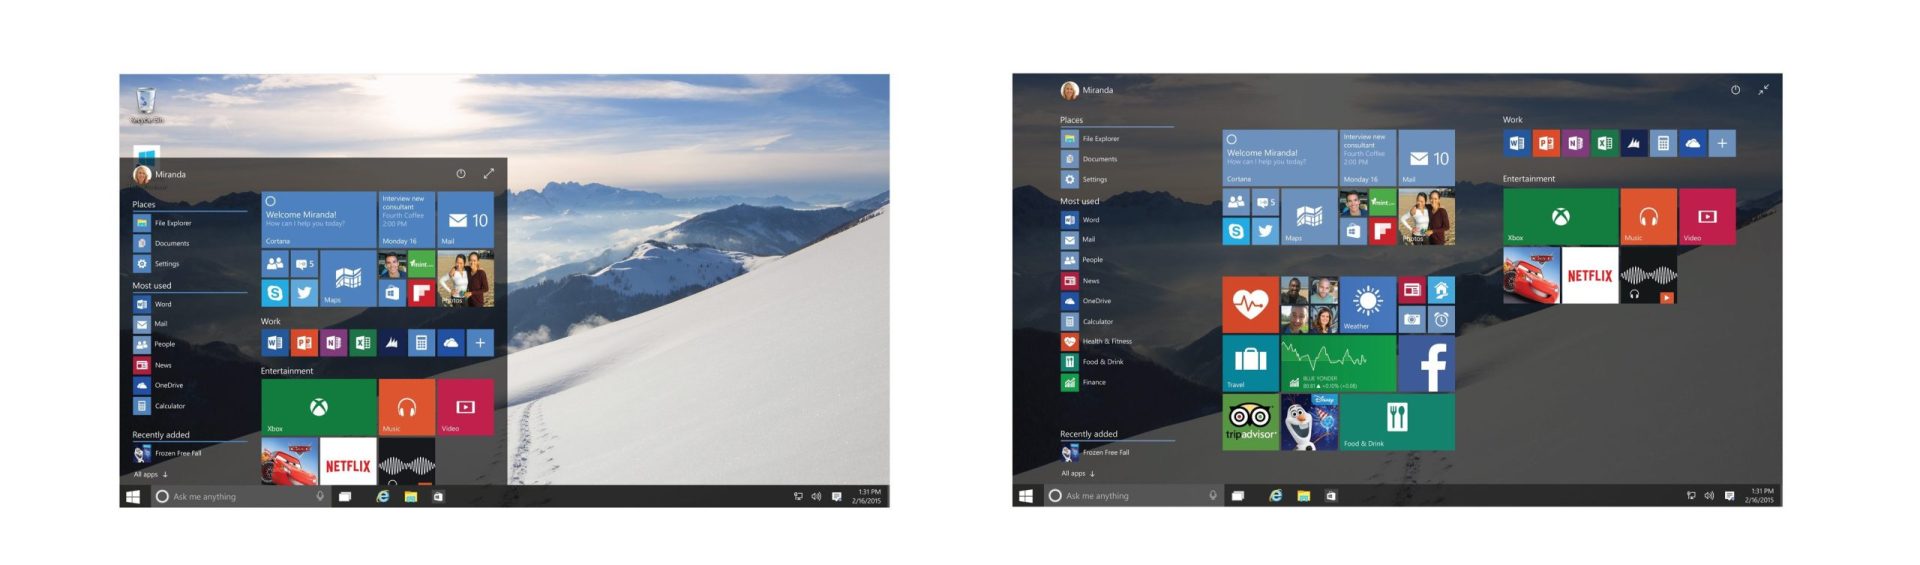 Microsoft apresenta Windows 10 com novo browser